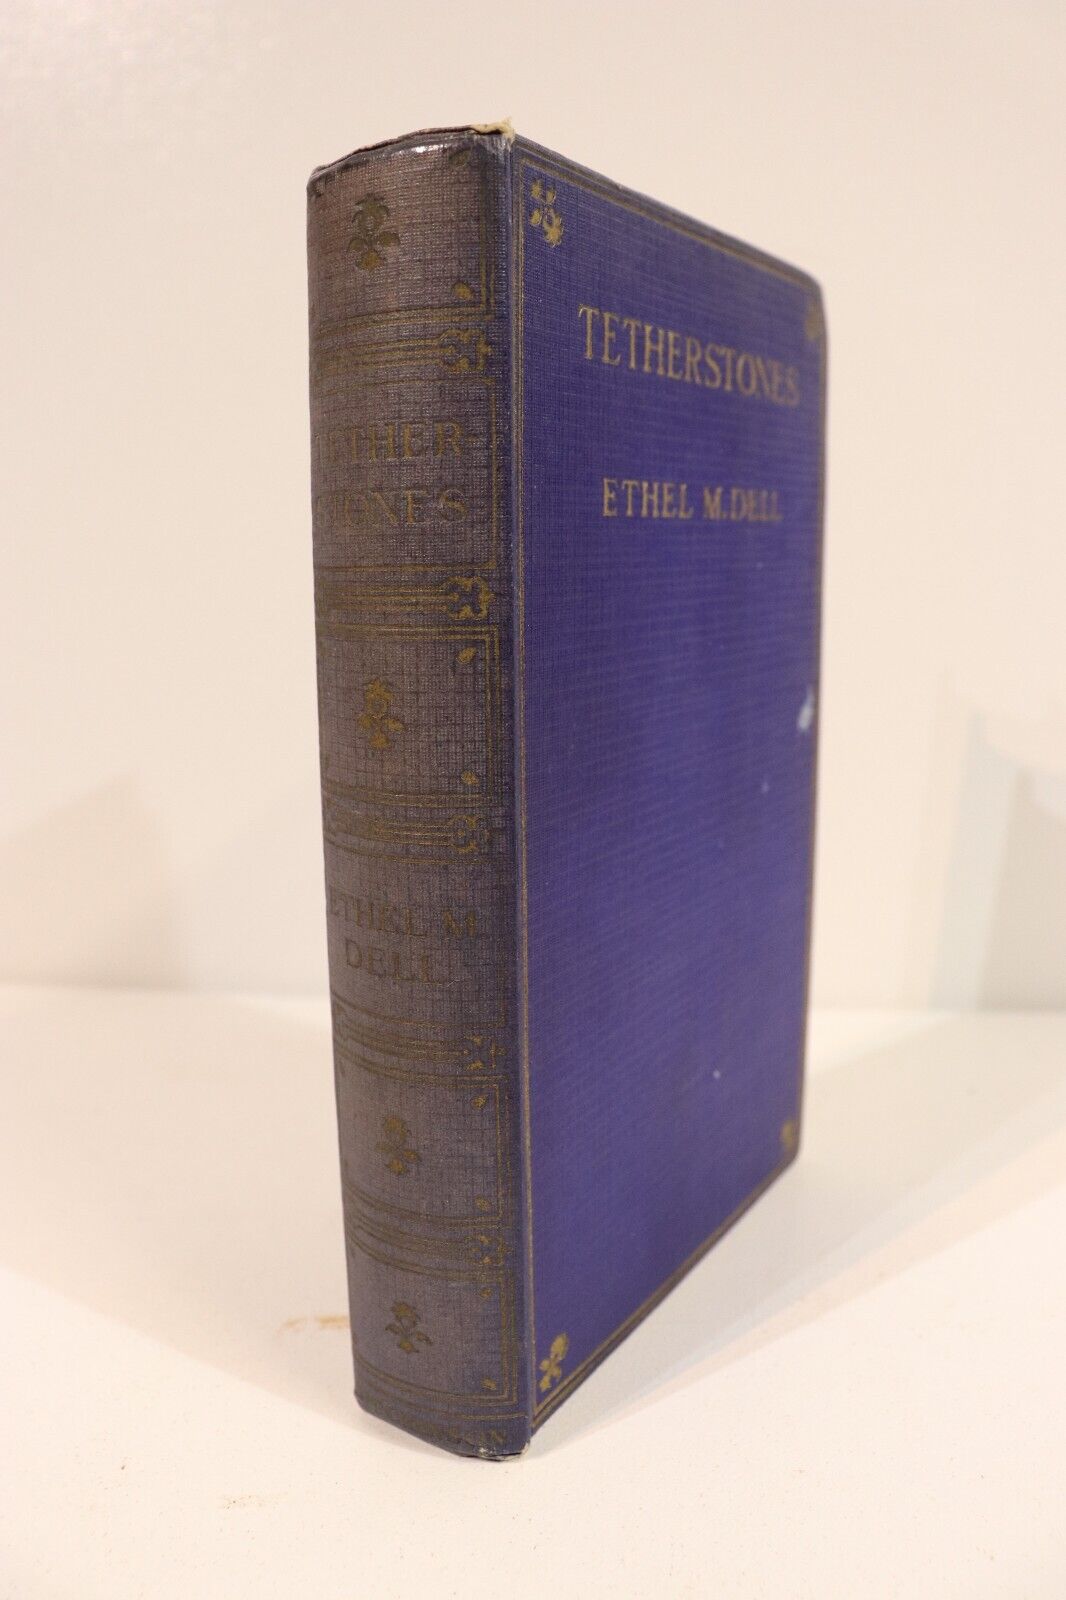 Tetherstones by Ethel M. Dell - c1920 - Antique Literature Fiction Book